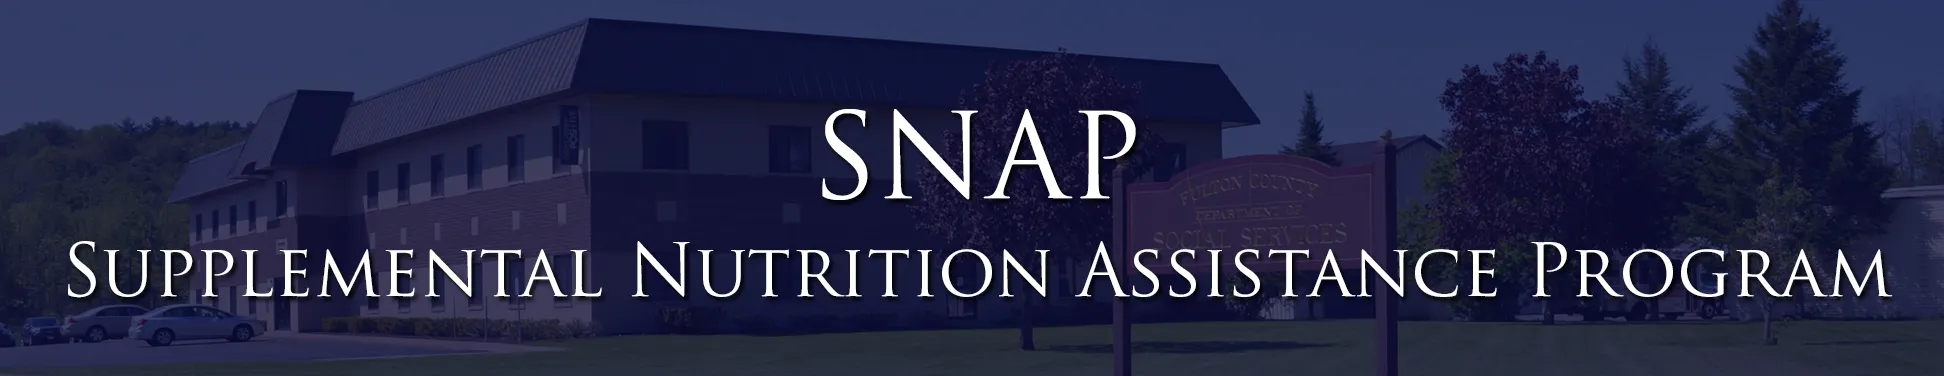 Department of Social Services - Supplemental Nutrition Assistance Program (SNAP)